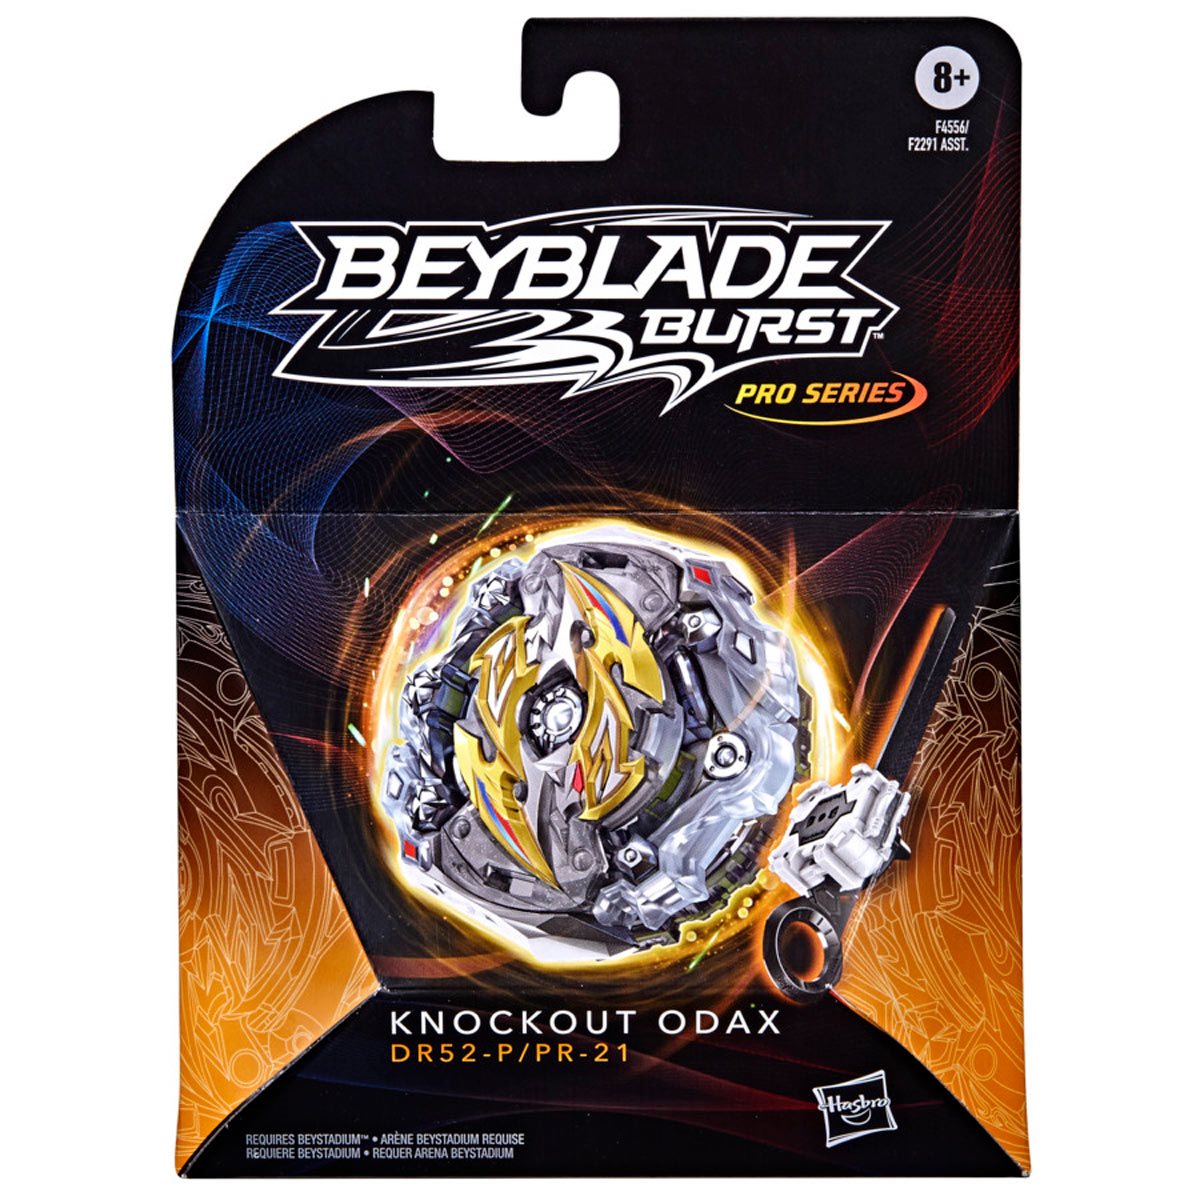 Beyblade Burst Pro Series Mirage Fafnir Spinning Top Starter Pack